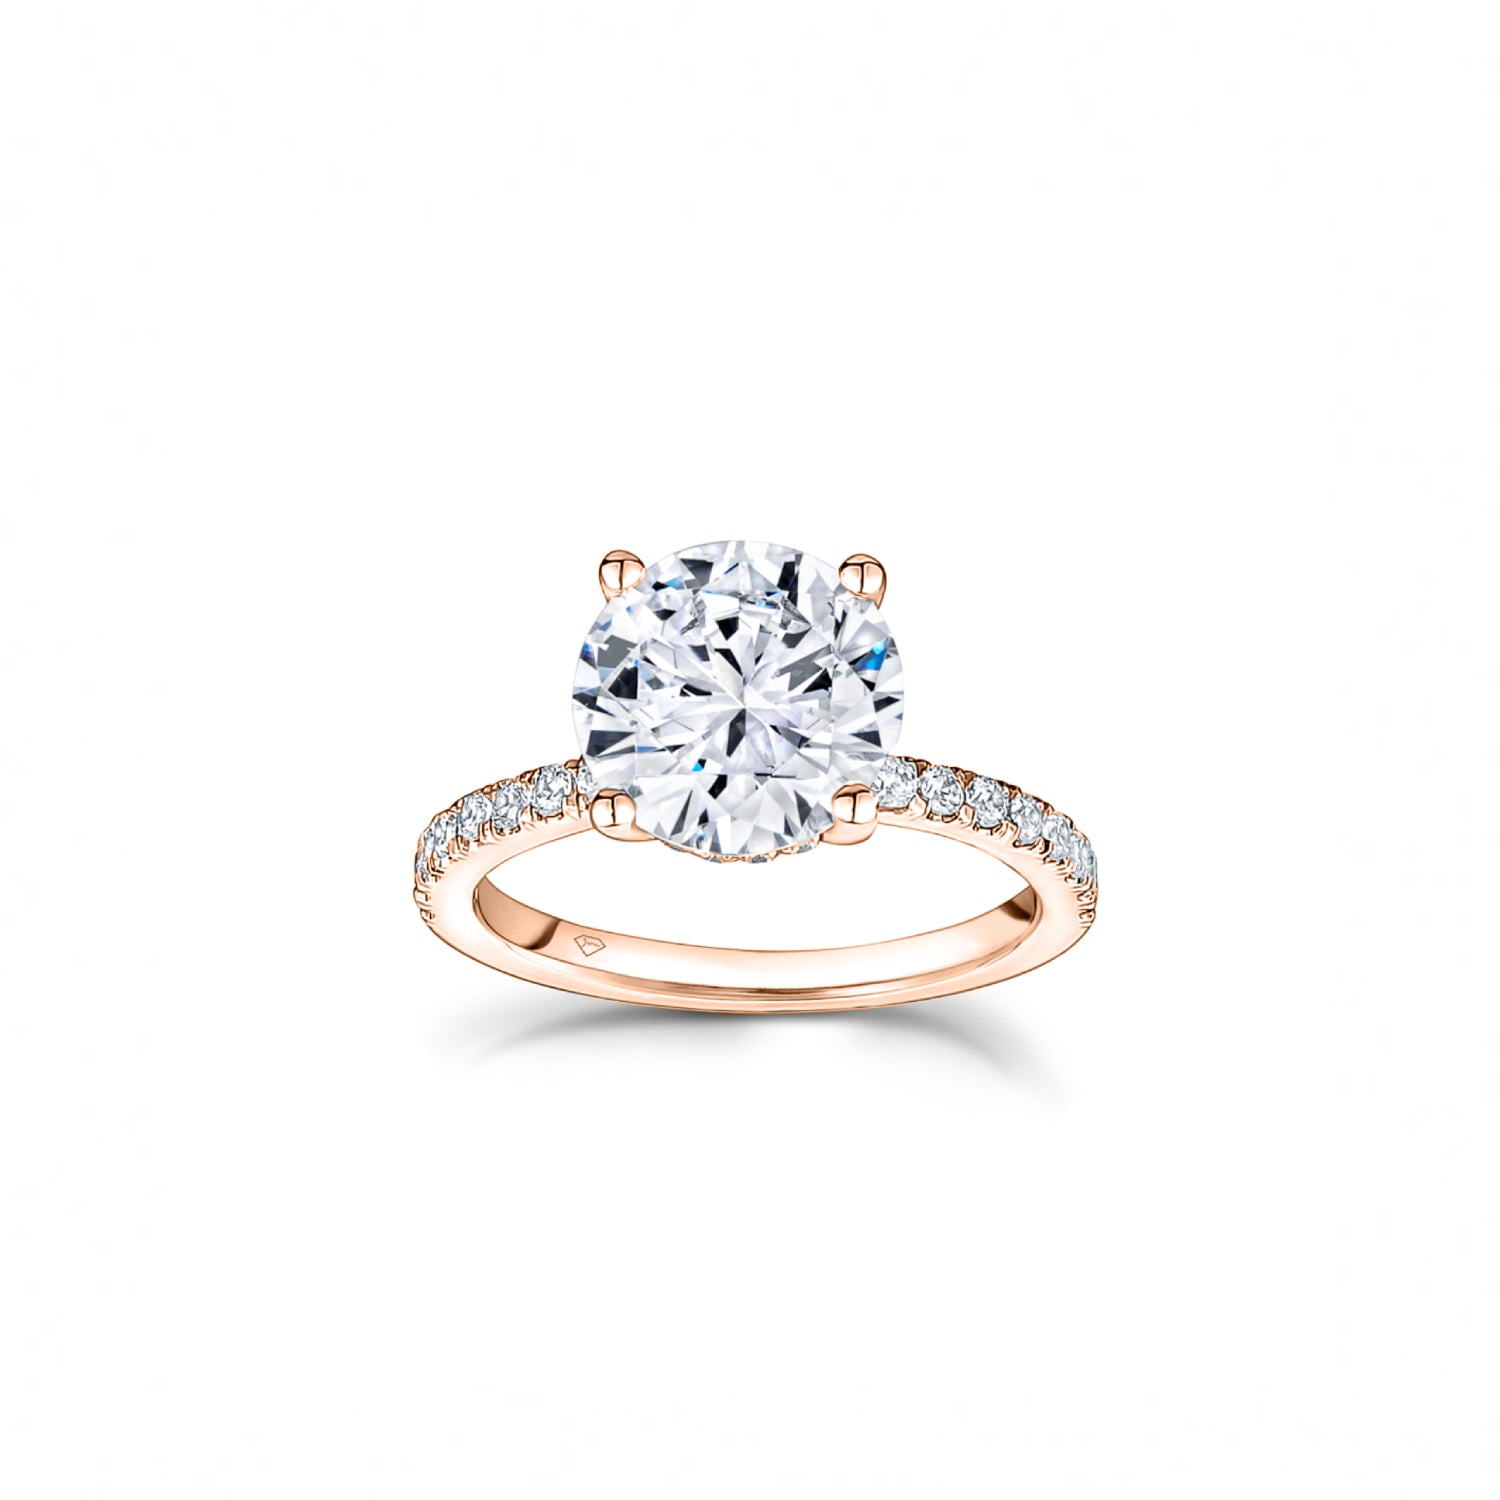 Round Brilliant Cut Diamond Hidden Halo Engagement Ring in Rose Gold